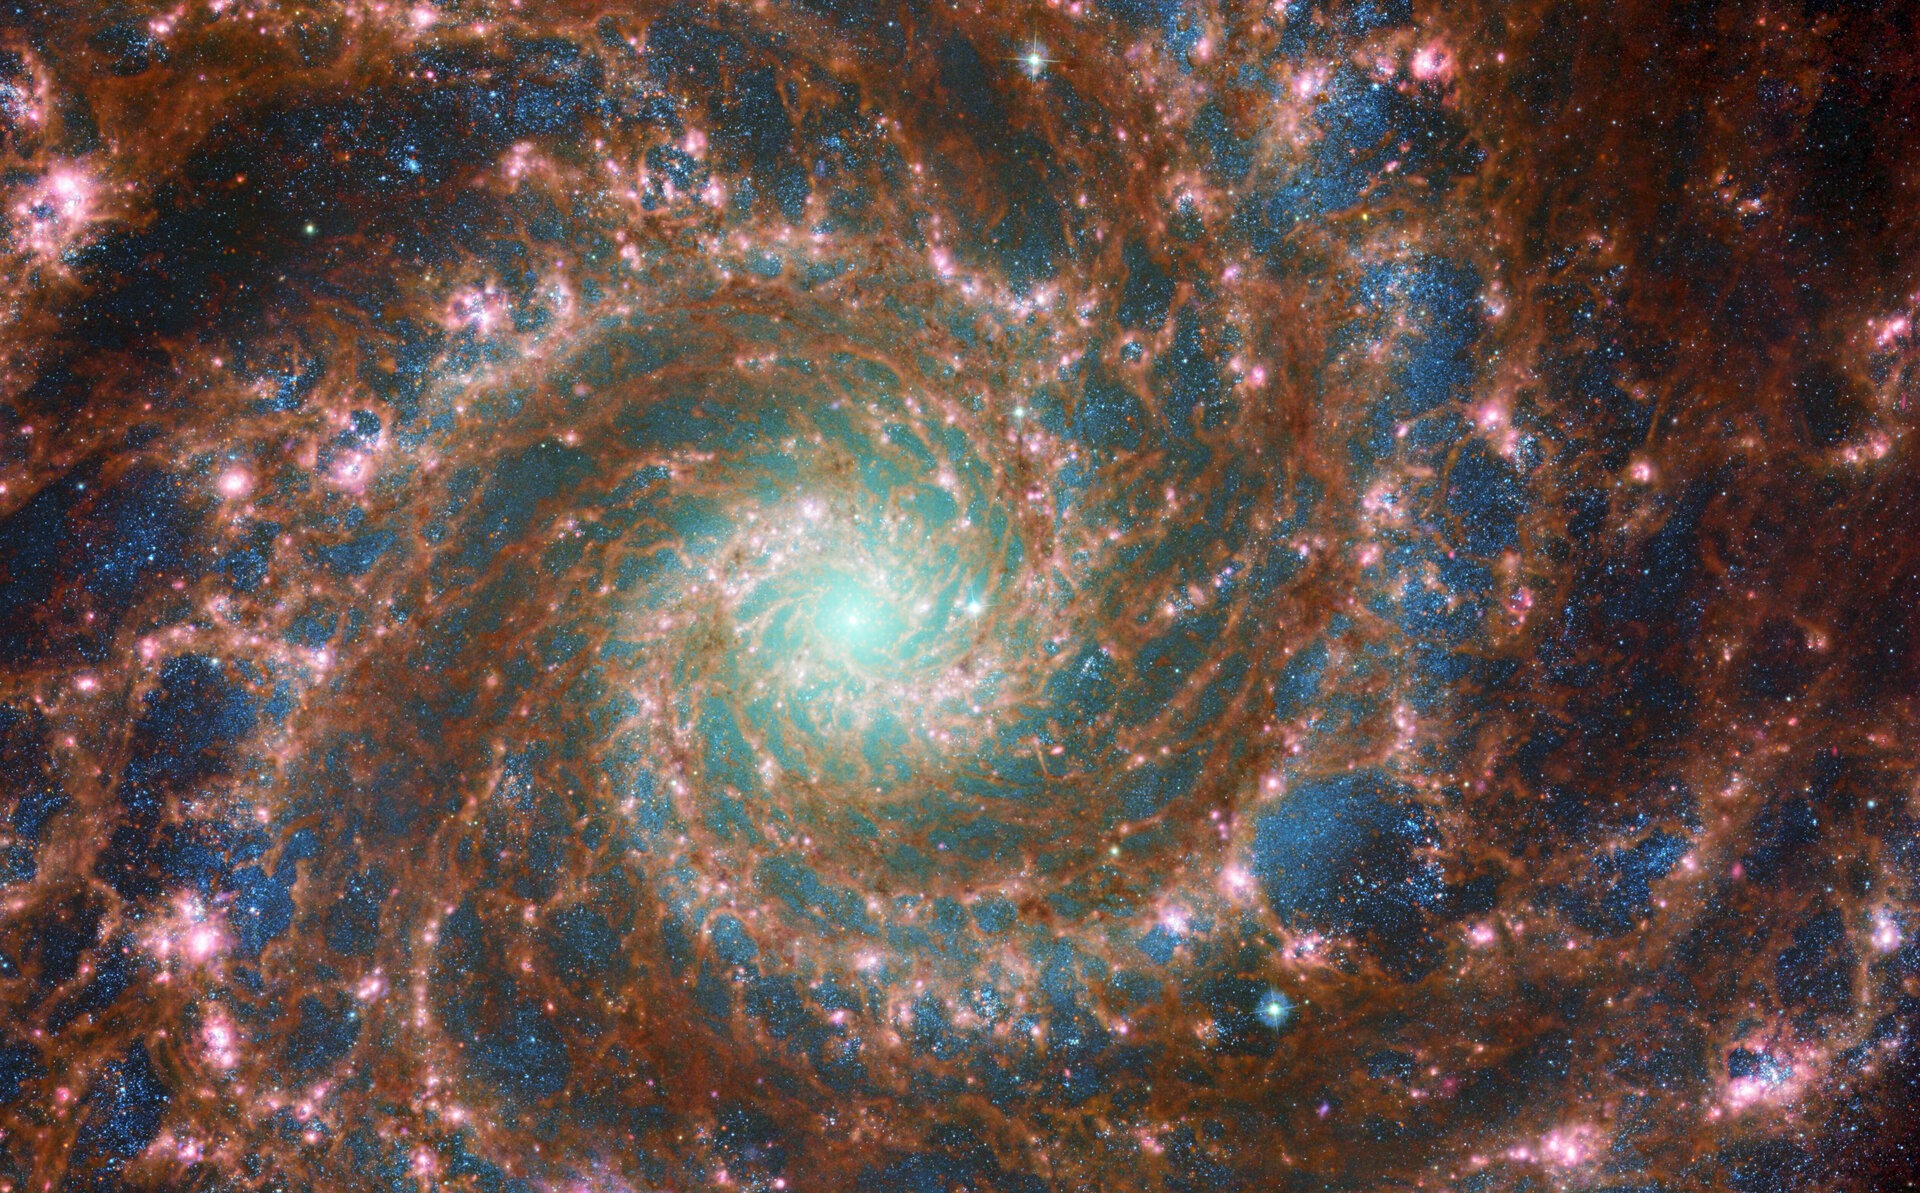 Kombinirana slika 'Fantomske galaksije' M74 nastala na temelju snimaka teleskopa Hubble (njegove ACS [Advanced Camera for Surveys] kamere) i teleskopa James Webb (njegovog instrumenta MIRI [Mid-InfraRed Instrument]) (©ESA/NASA/CSA et al).